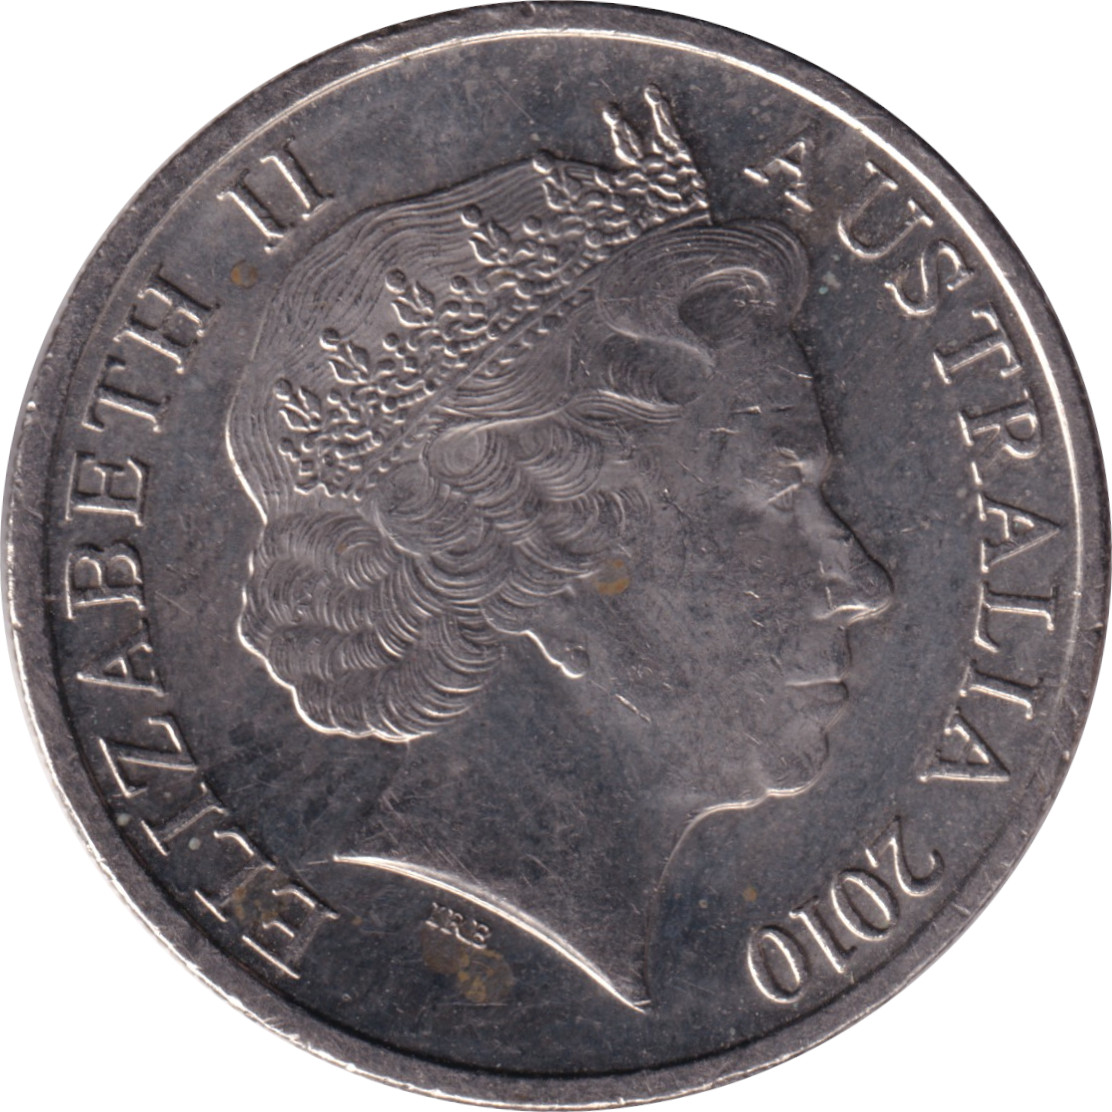 10 cents - Elizabeth II - Old head